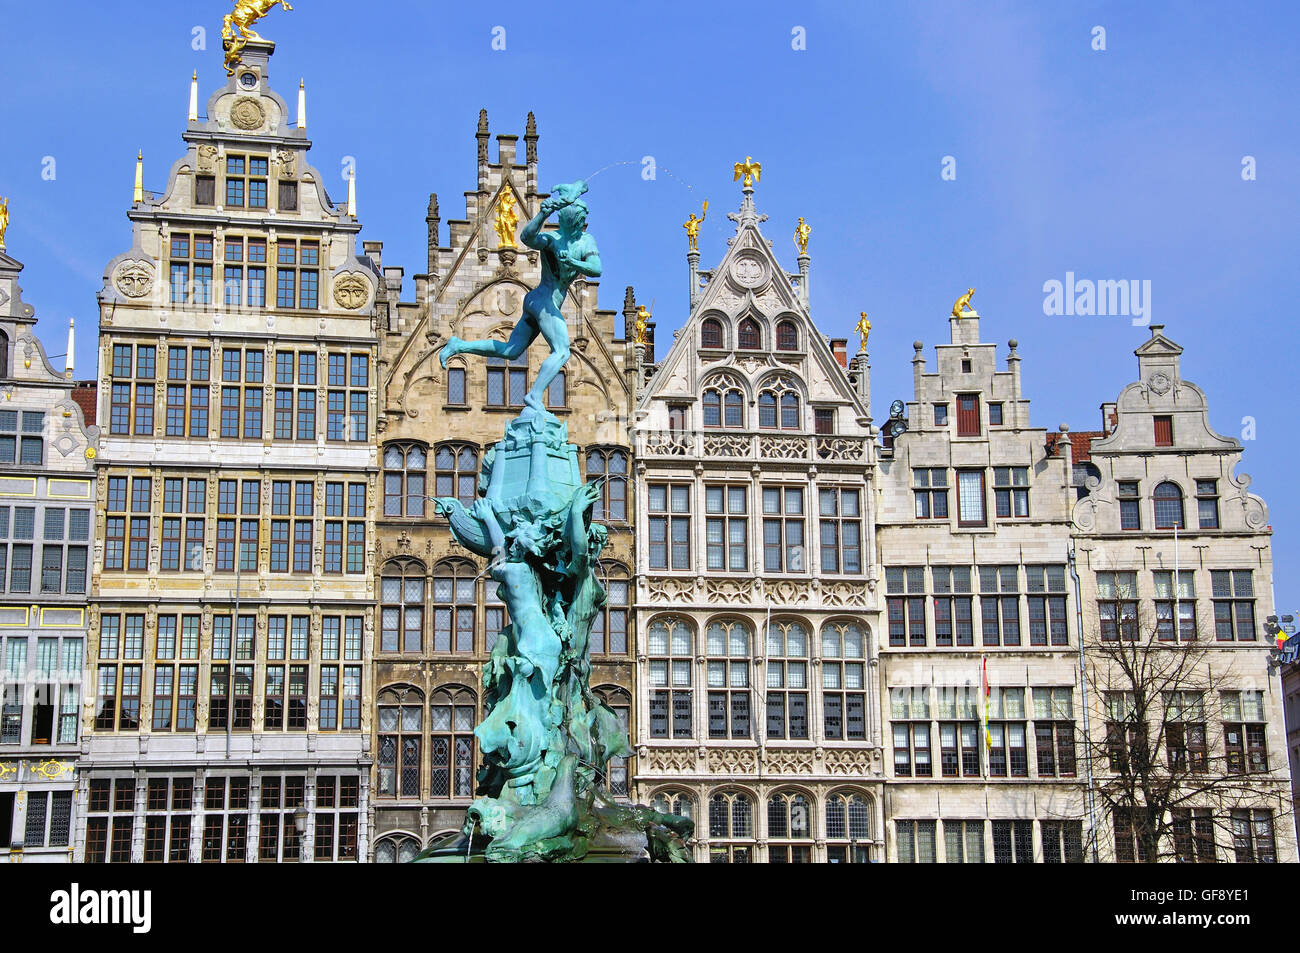 Monument on central square of Antwerpen, Belgium Stock Photo